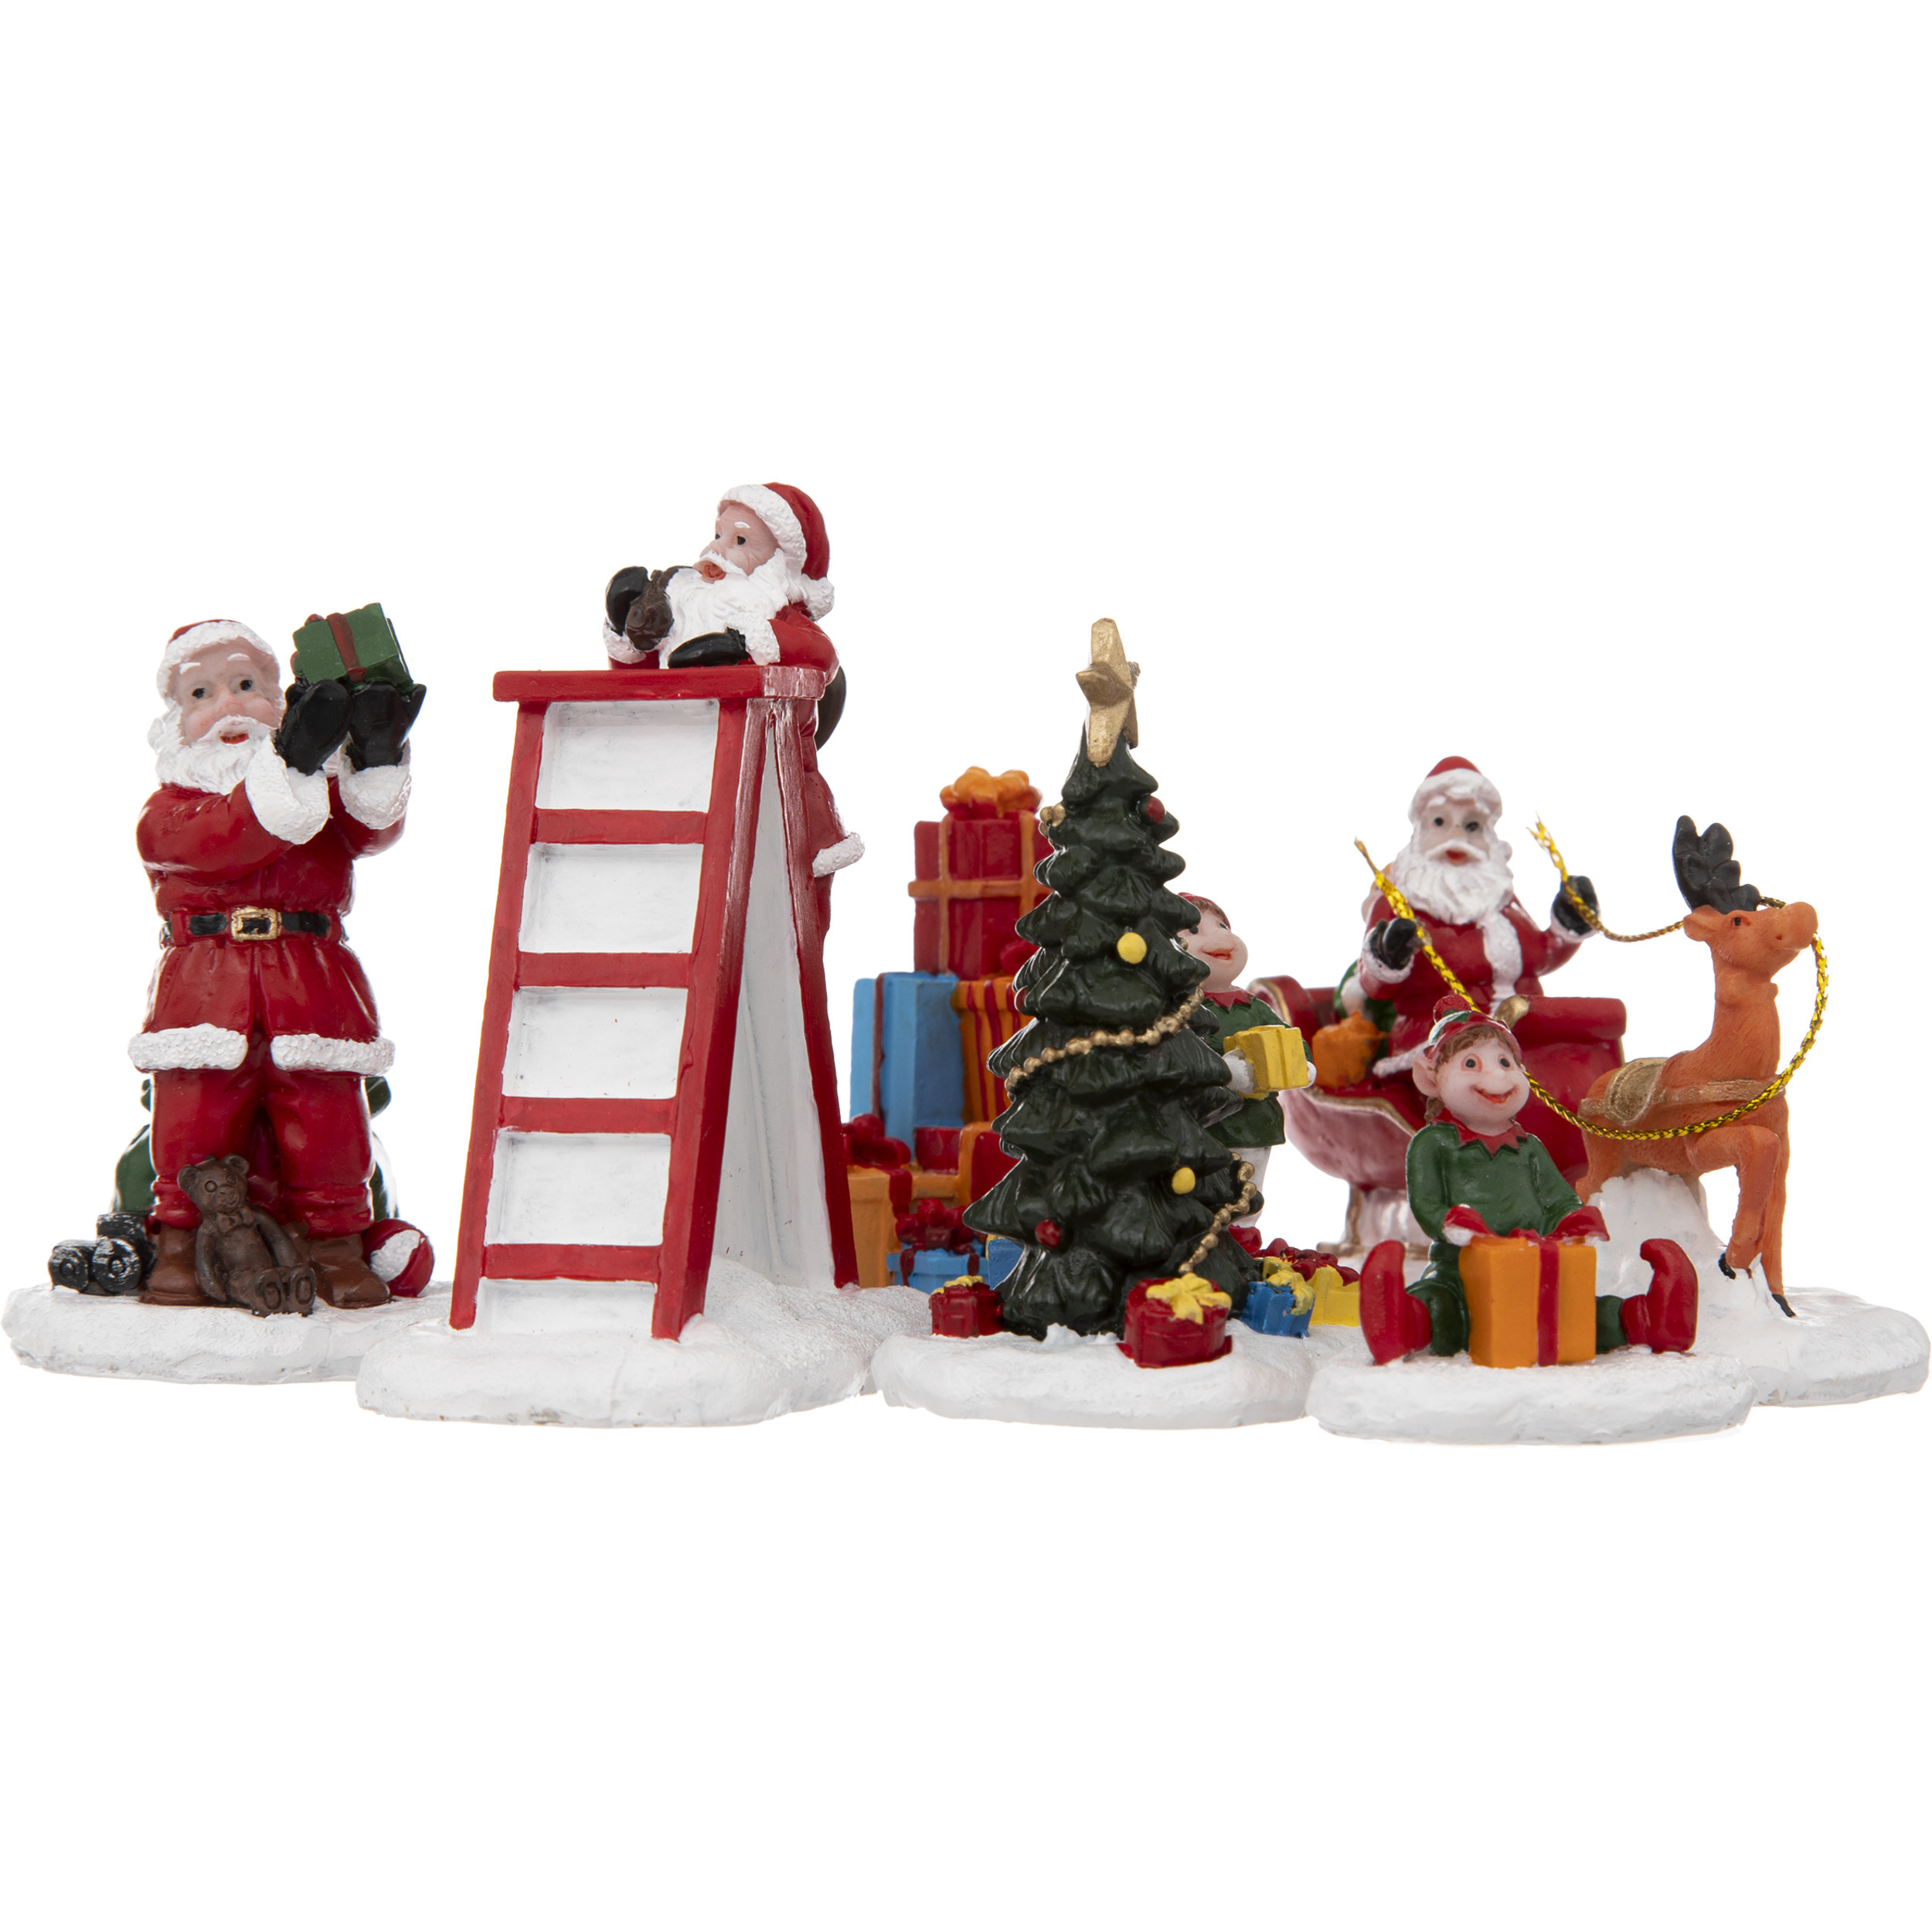 Kerstdorp accessoires miniatuur figuurtjes poppetjes-kerstman